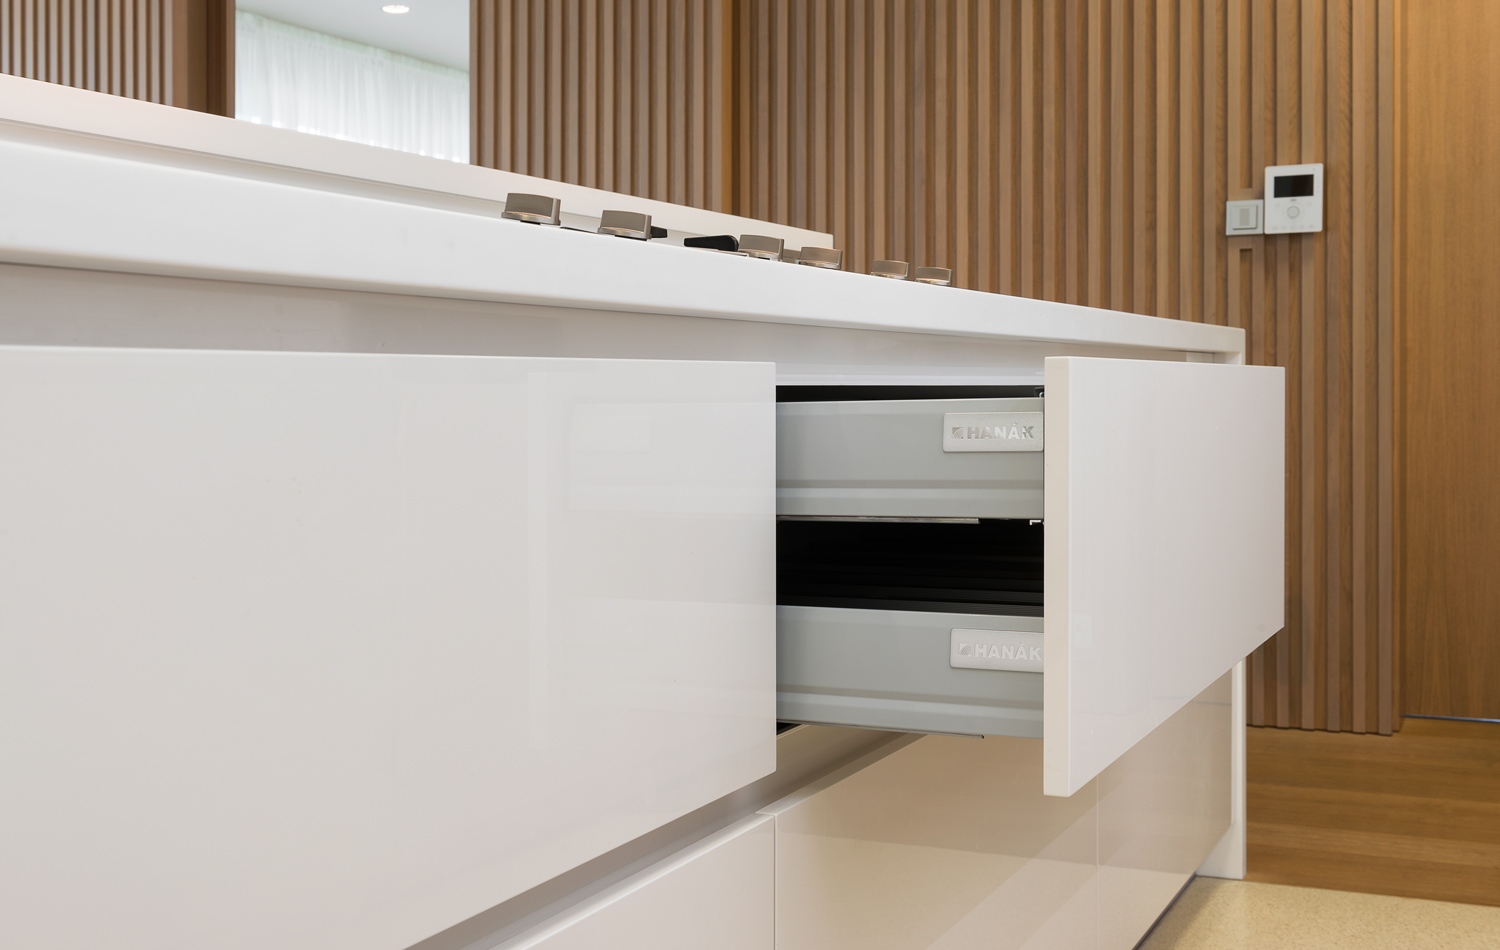 Hanák nábytek Minimalistický interiér Bílý lak Kuchyně 